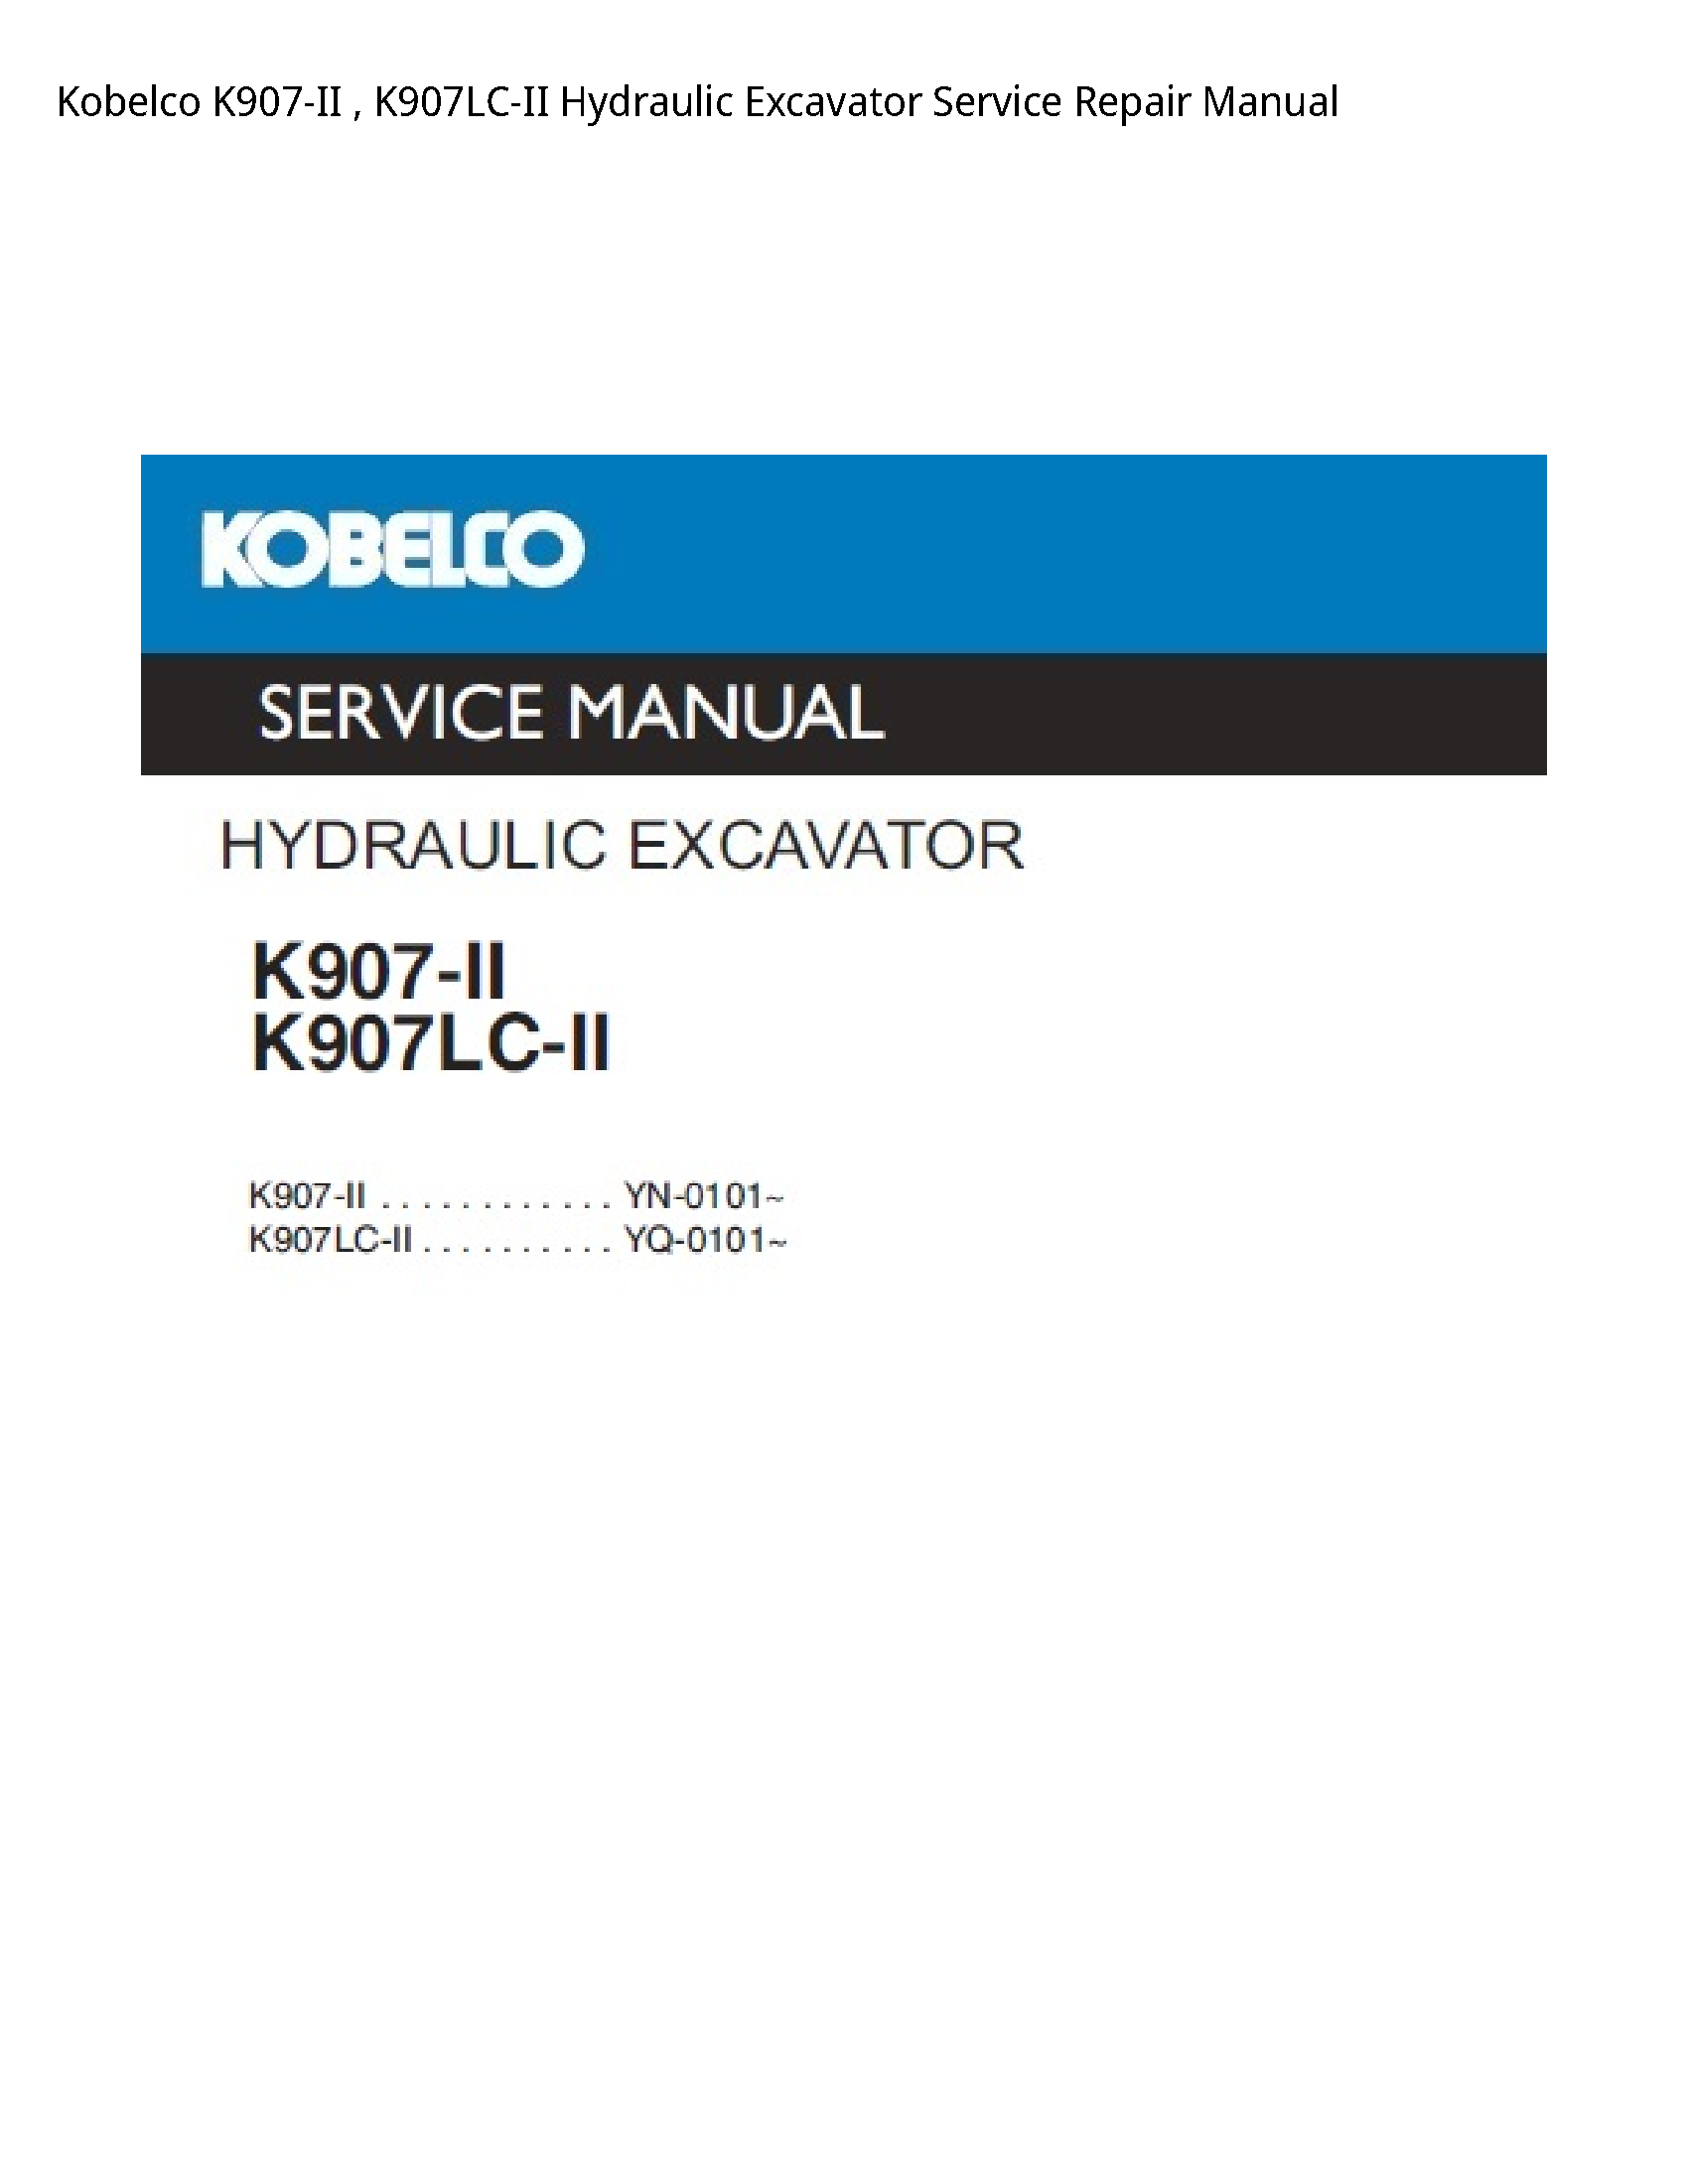 Kobelco K907-II Hydraulic Excavator manual